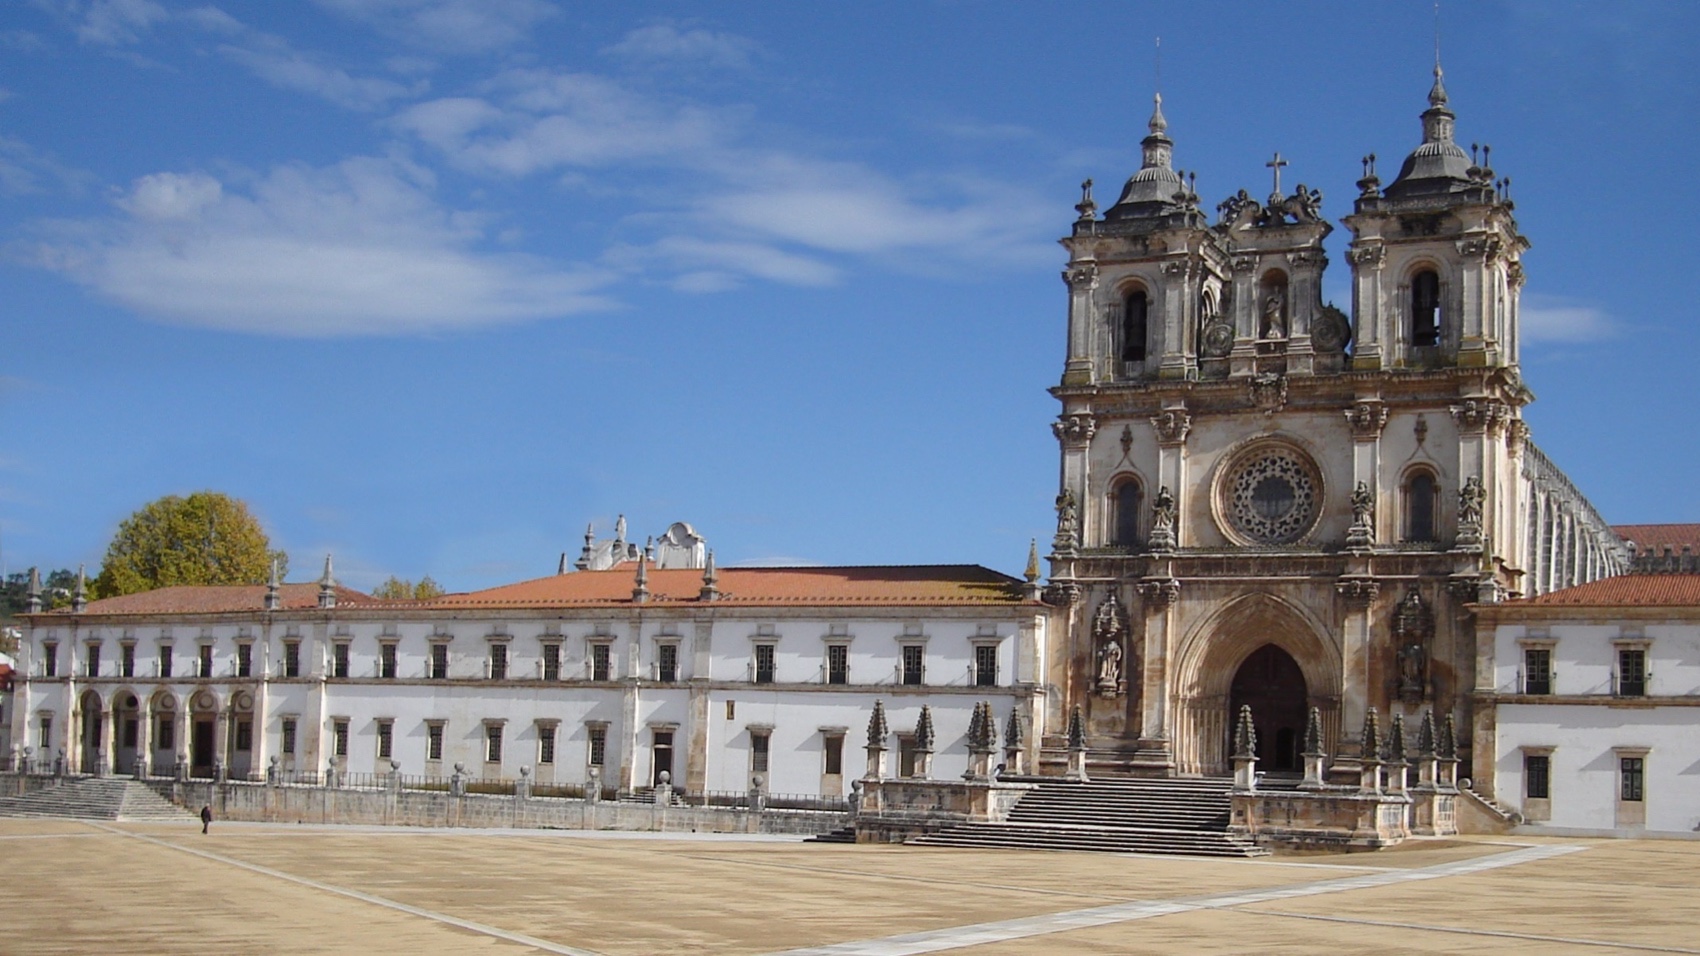 Turismo Centro de Portugal - Alcobaca Batalha Monasteries with Obidos